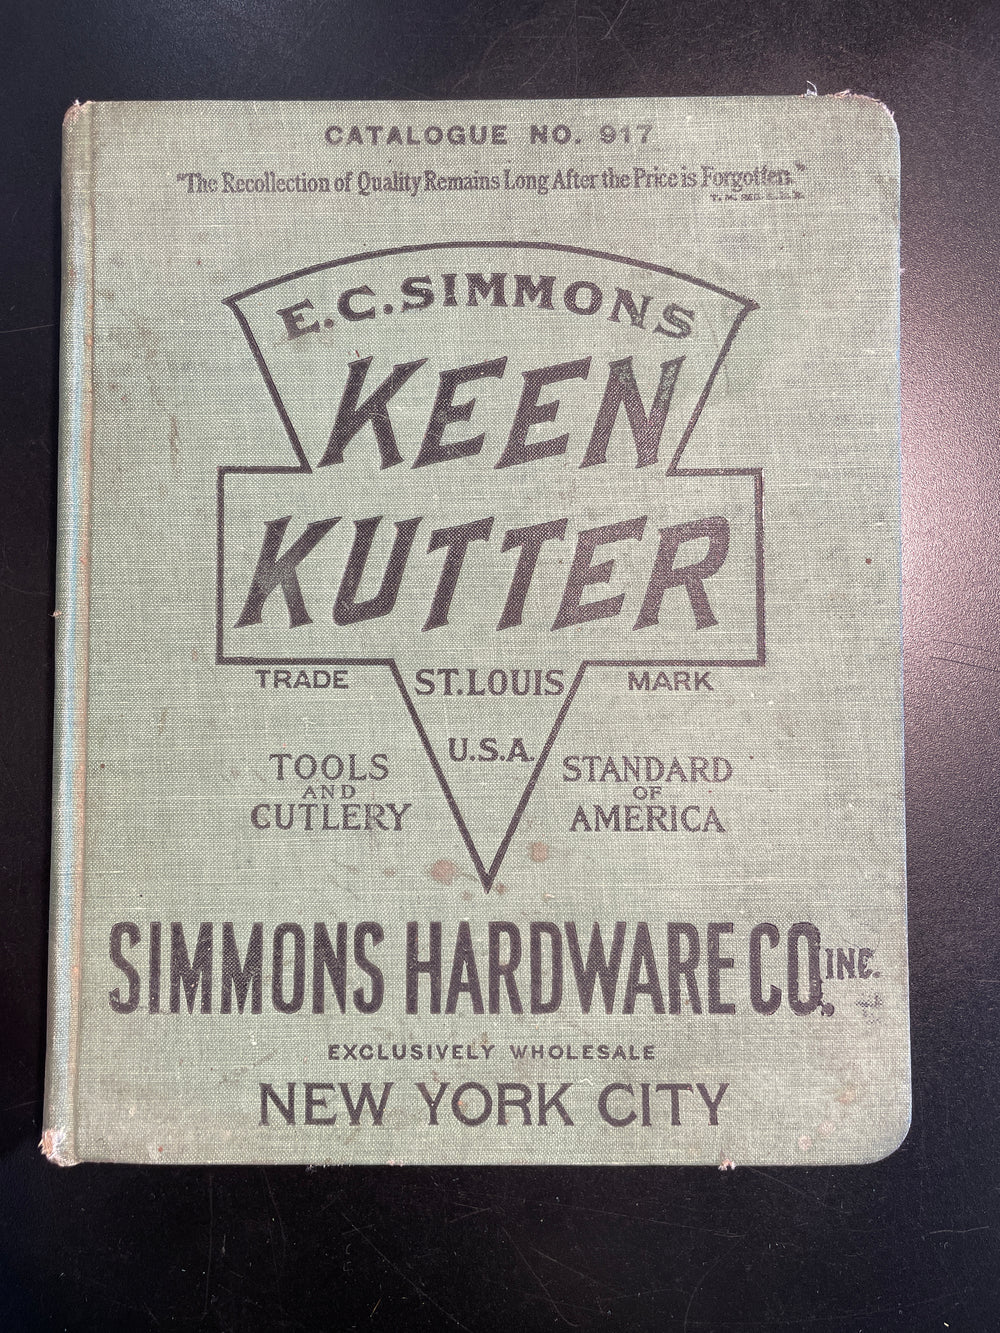 1910 E.C. SIMMONS KEEN KUTTER COMPLETE CATALOGUE